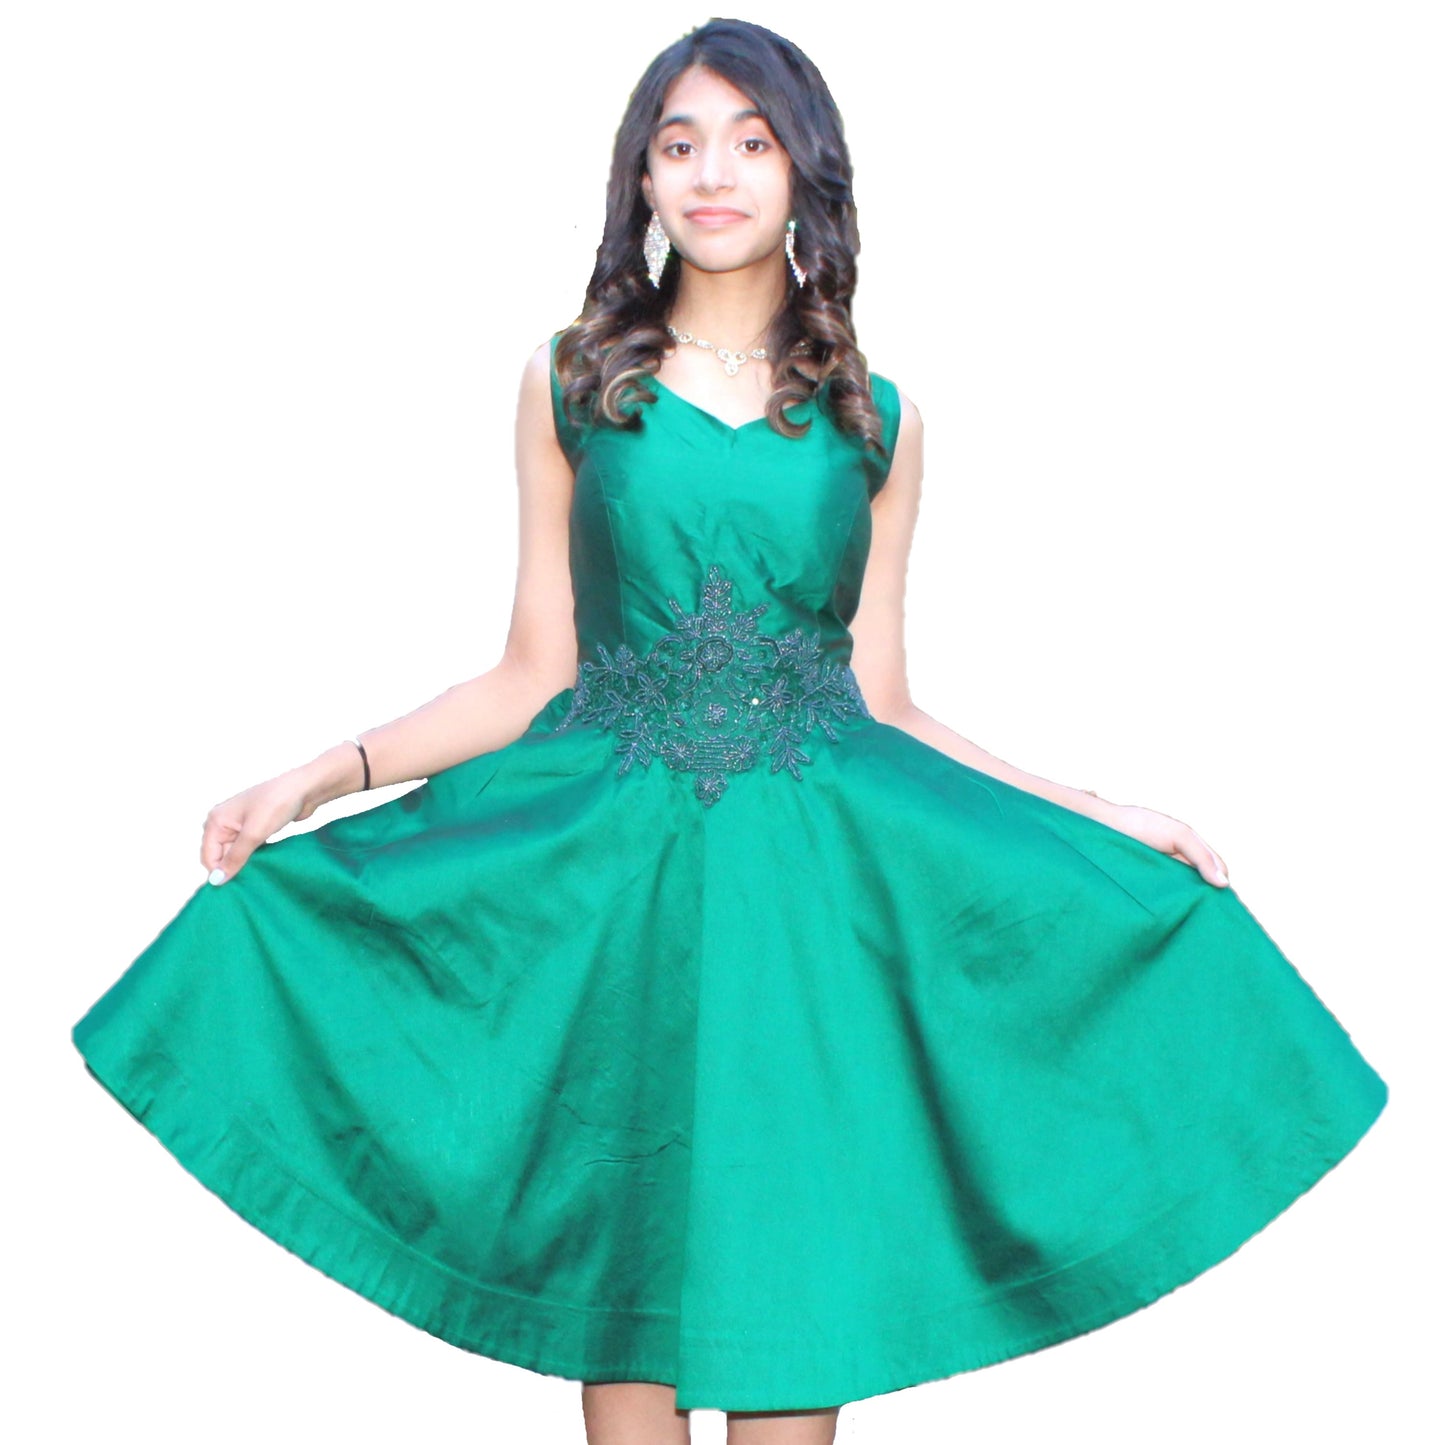 Maharani's Designer Silk Evening Dress - Wine or Emerald Green (M)